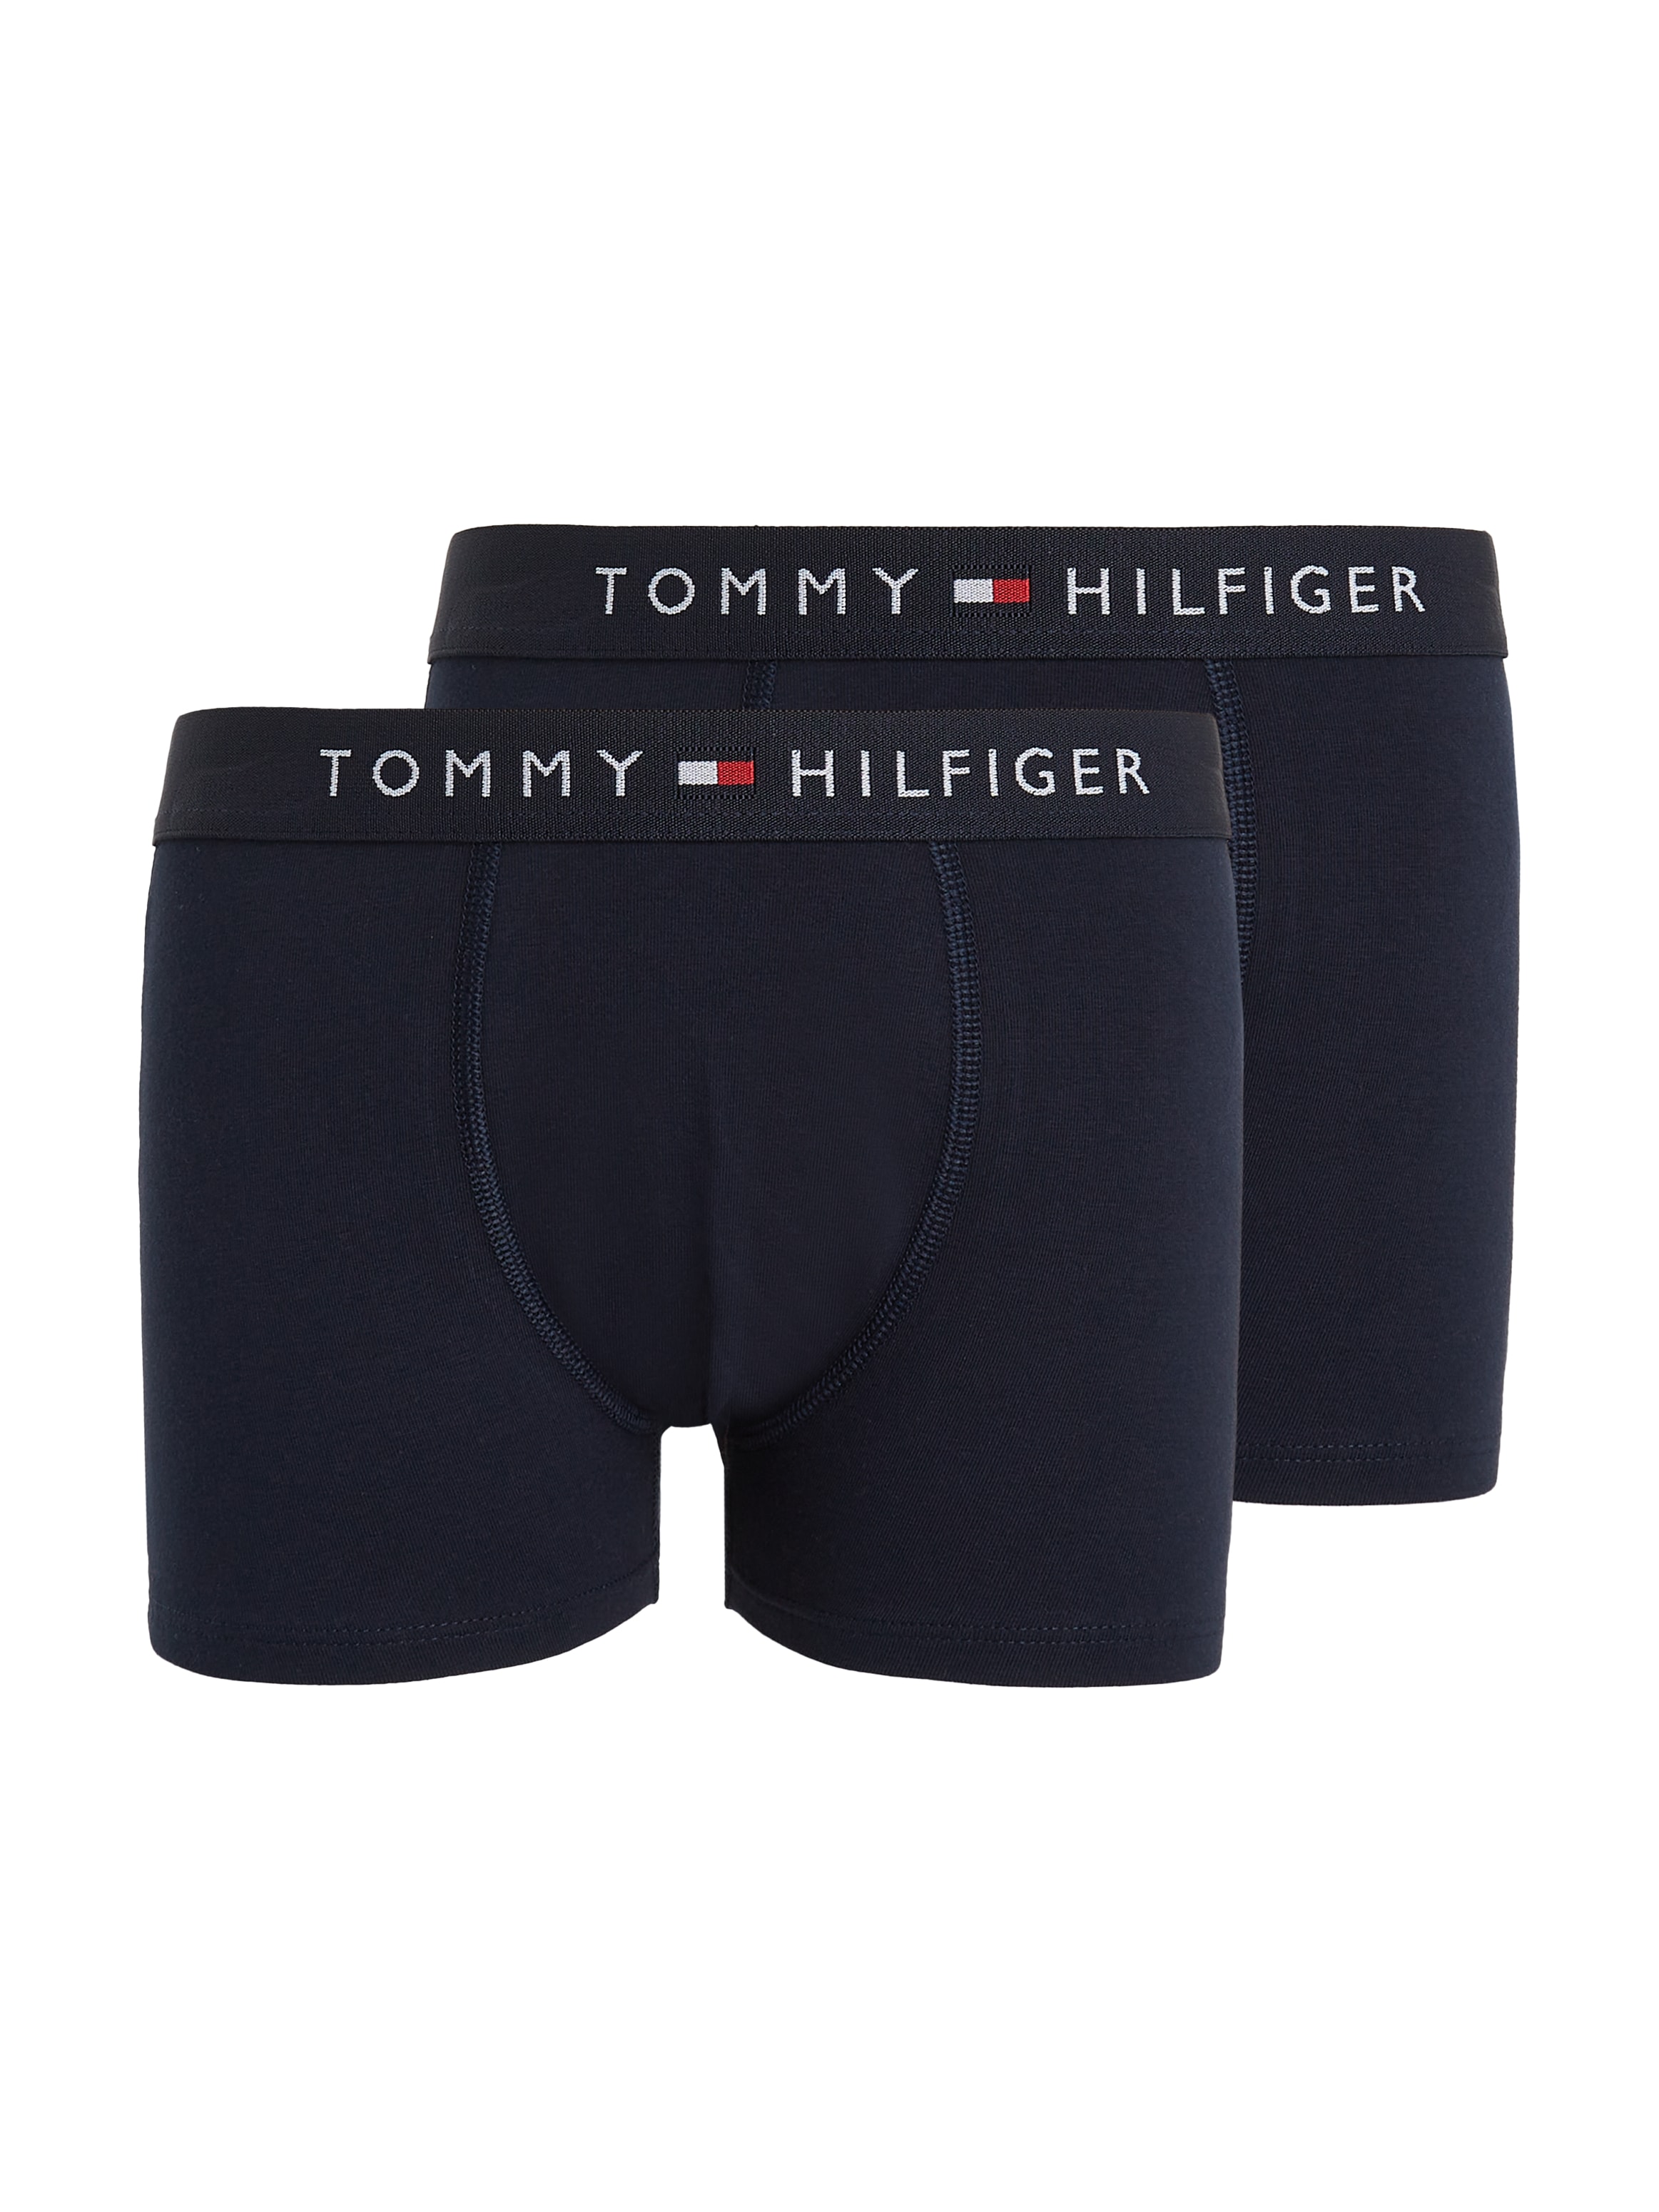 TOMMY HILFIGER Underwear Trunk (Packung 2 St. 2er-Pack)